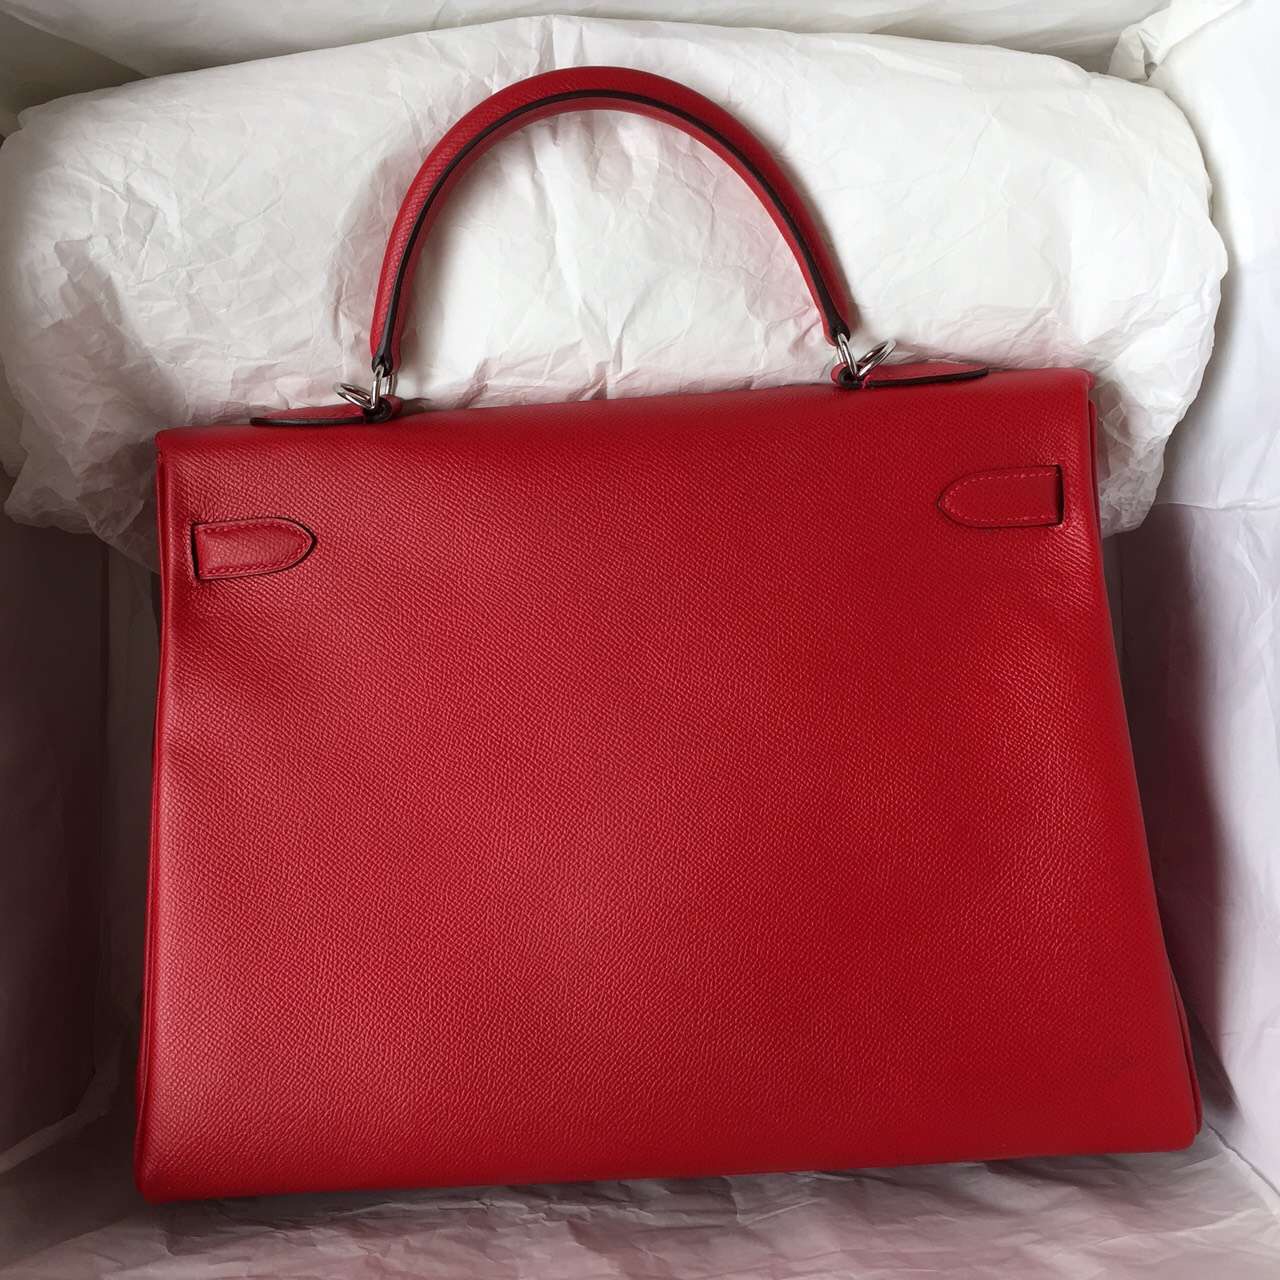 Cheap Hermes Q5 Chinese Red Kelly Bag 35cm Retourne Epsom Leather Tote Bag